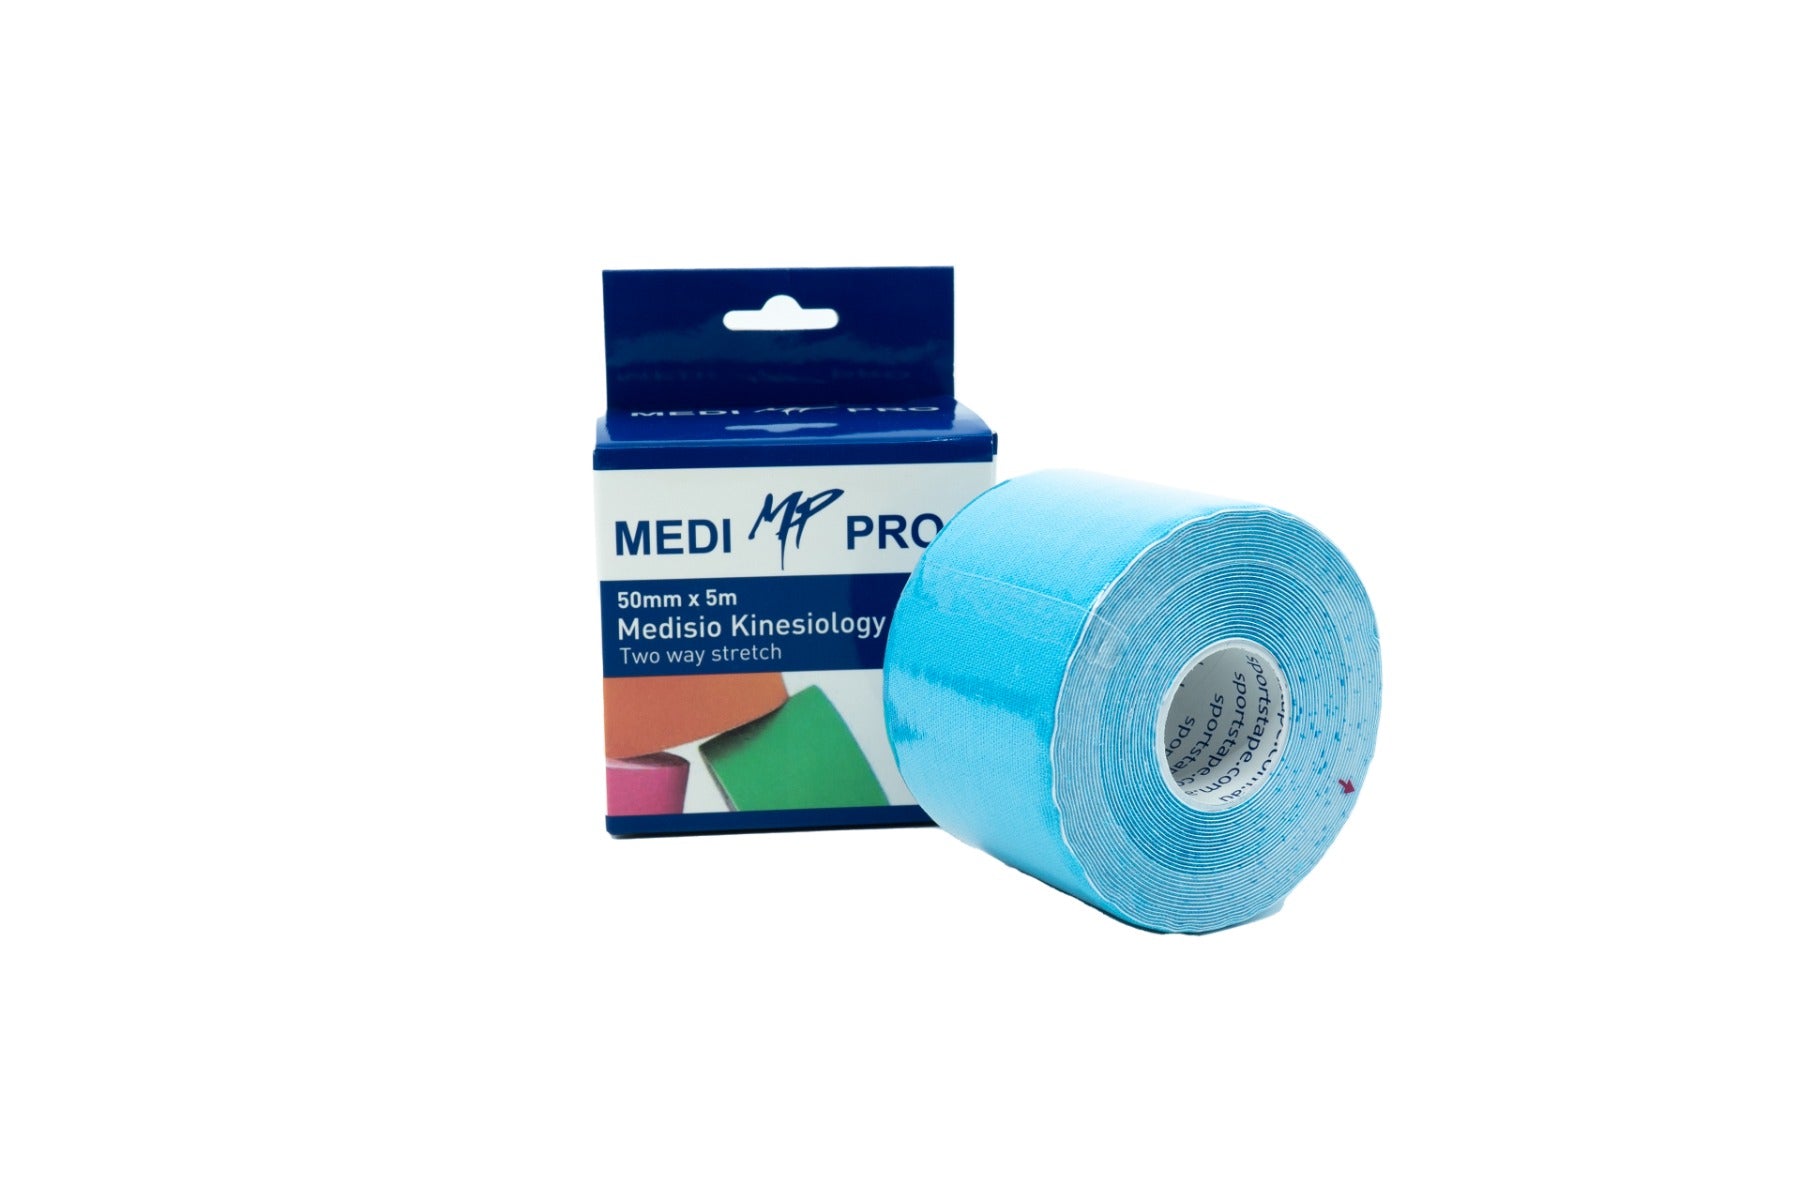 Medisio K-Tape 50mm x 5m [2 way Stretch] CLEARANCE MediPro Sports Tape